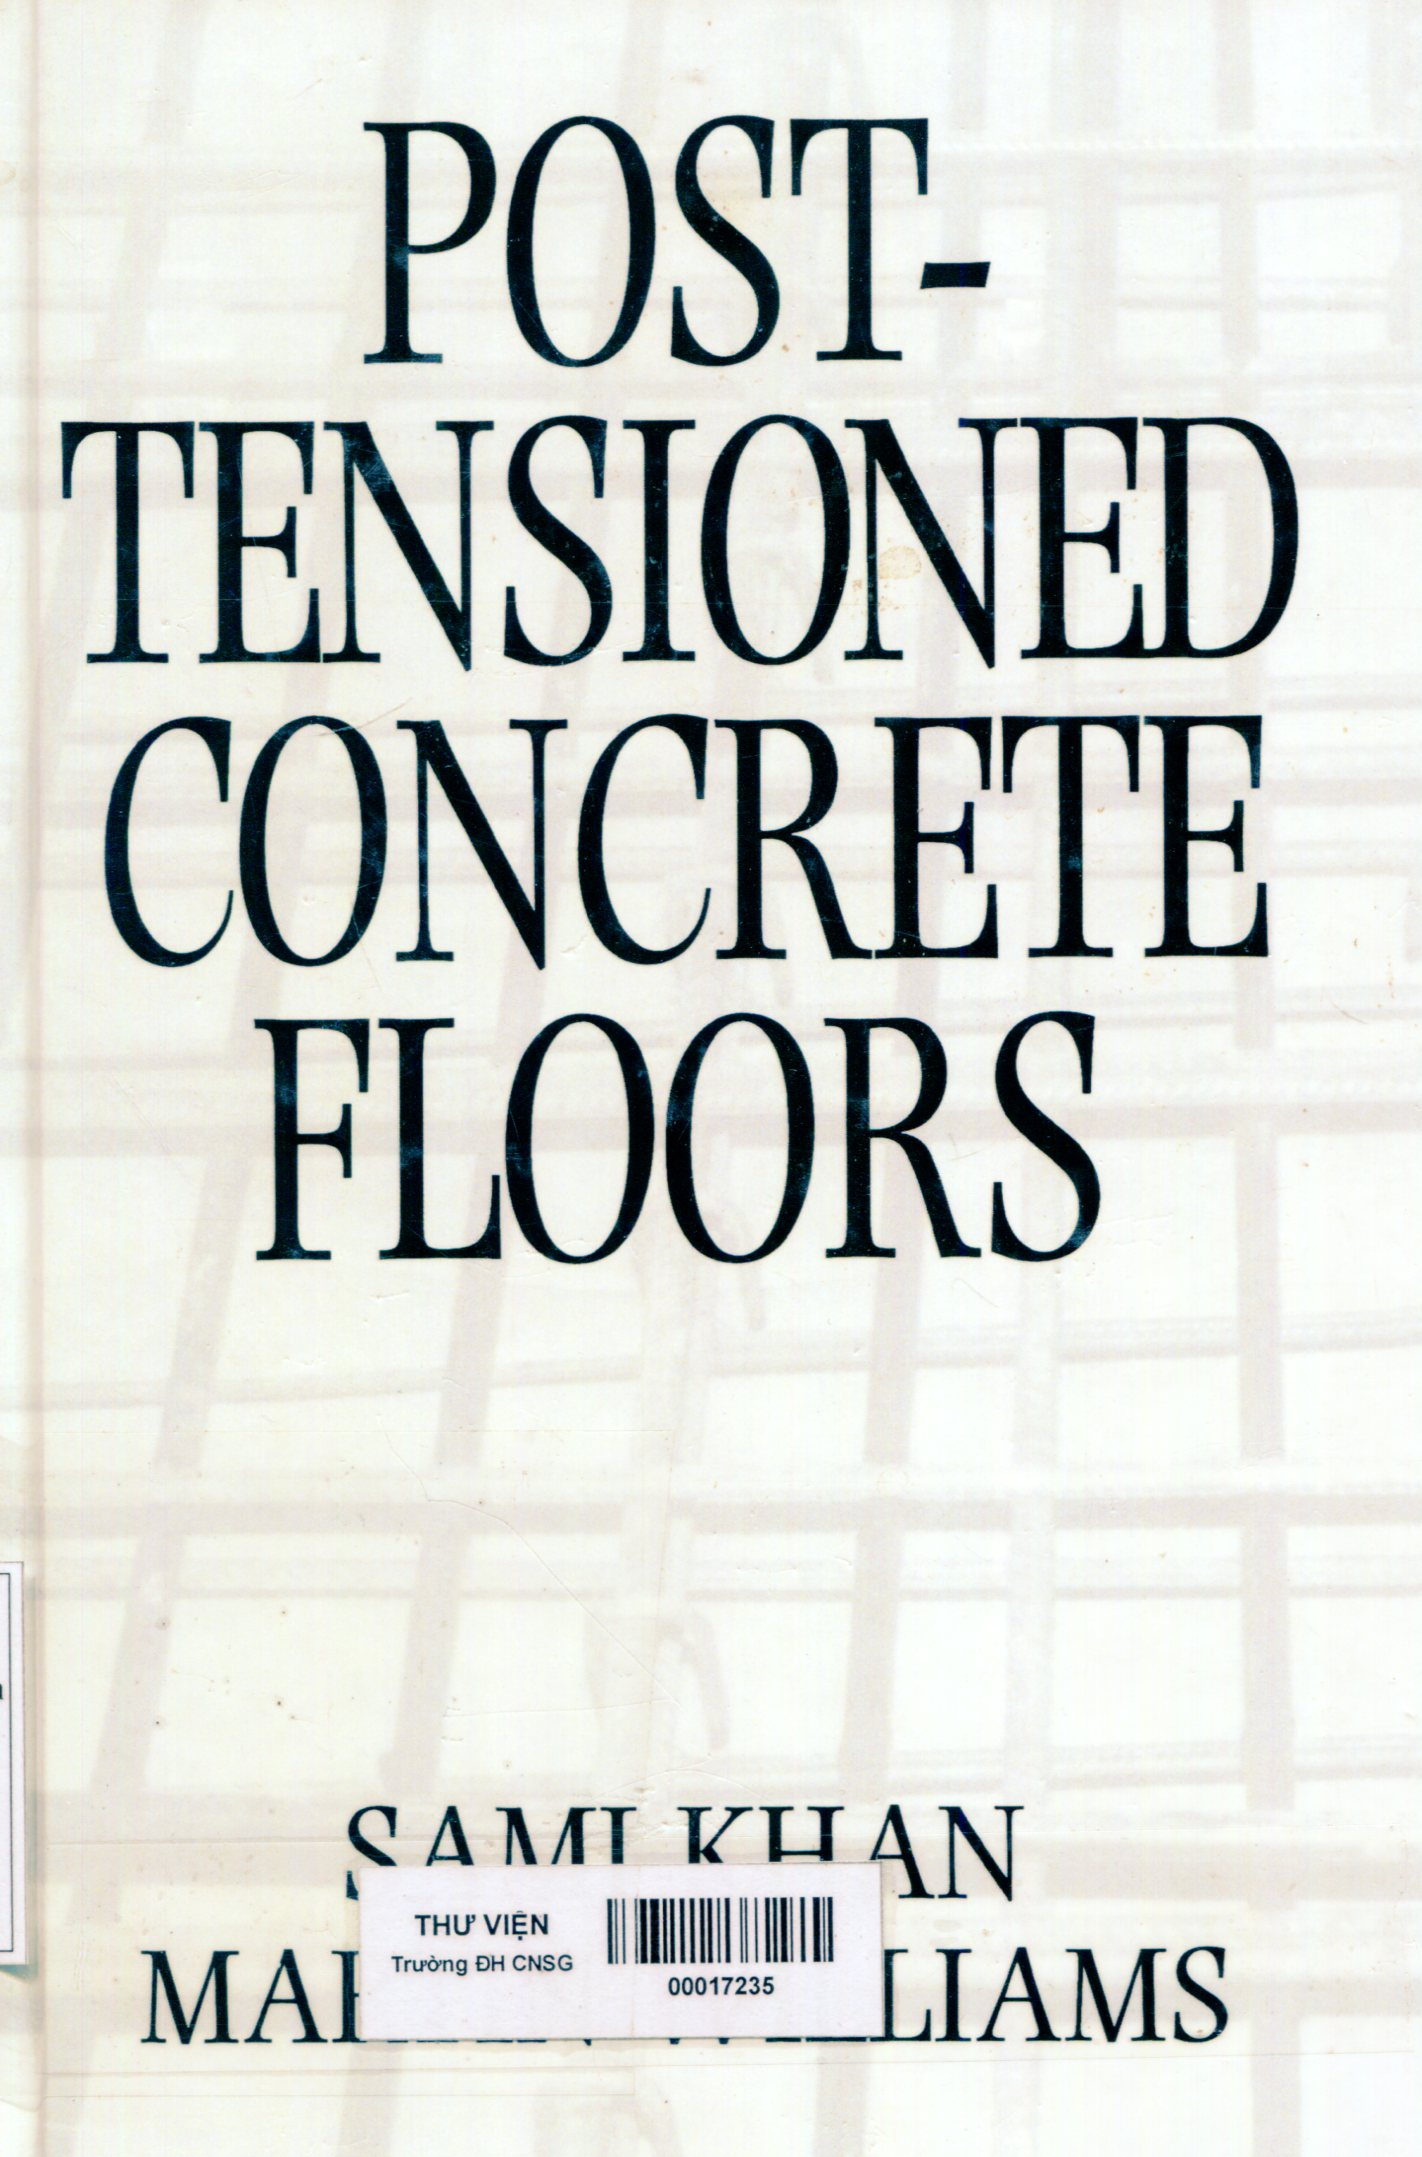 Post-tensioned concrete floors